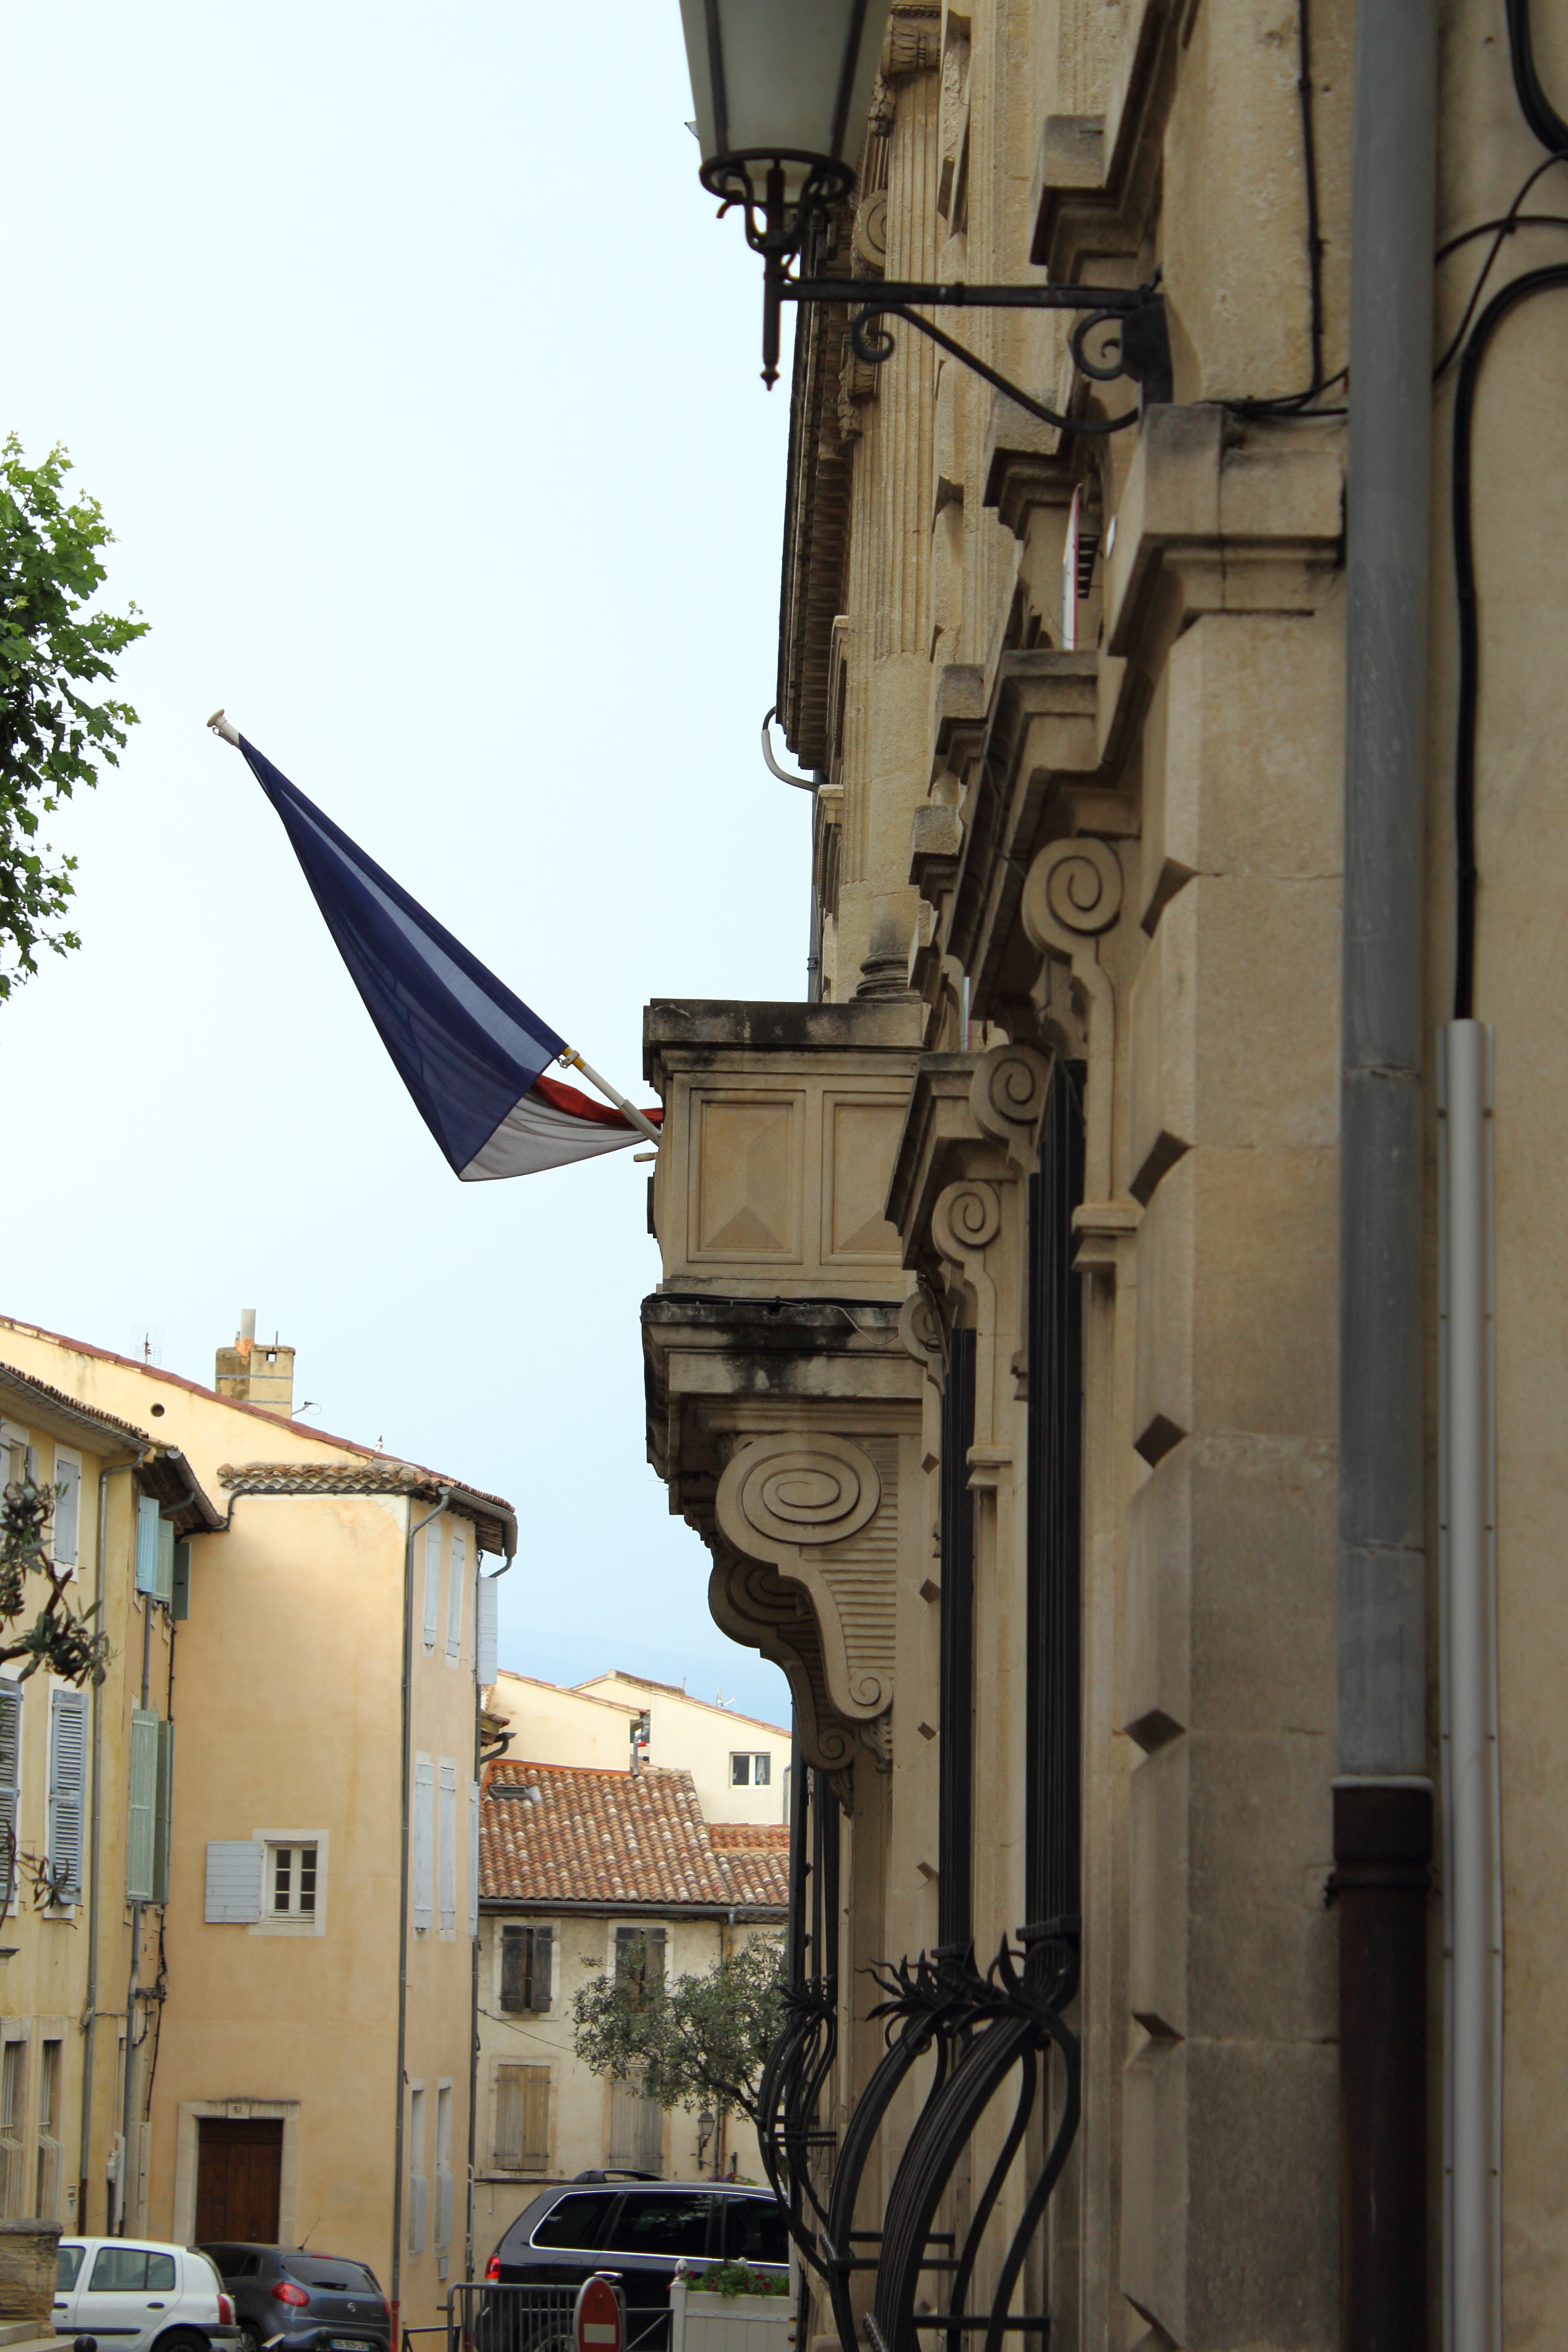 Visiting Provence: Carpentras, blog post by Aspasia S. Bissas